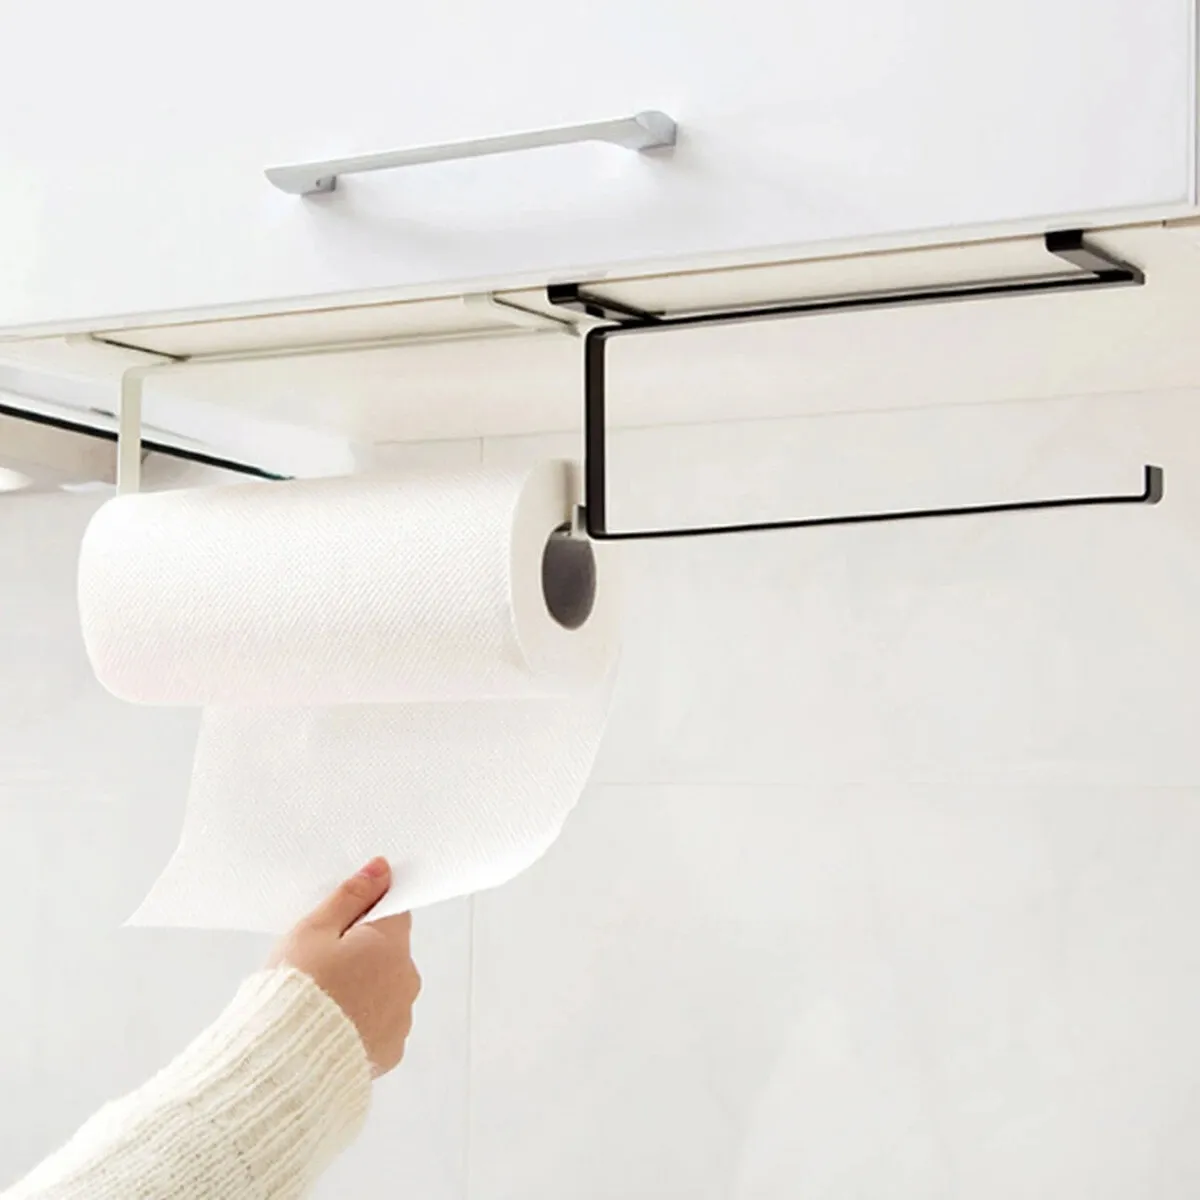 Doors Cabinet Roll Paper Holder Kitchen Towel Hook Wardrobe Towel Rack